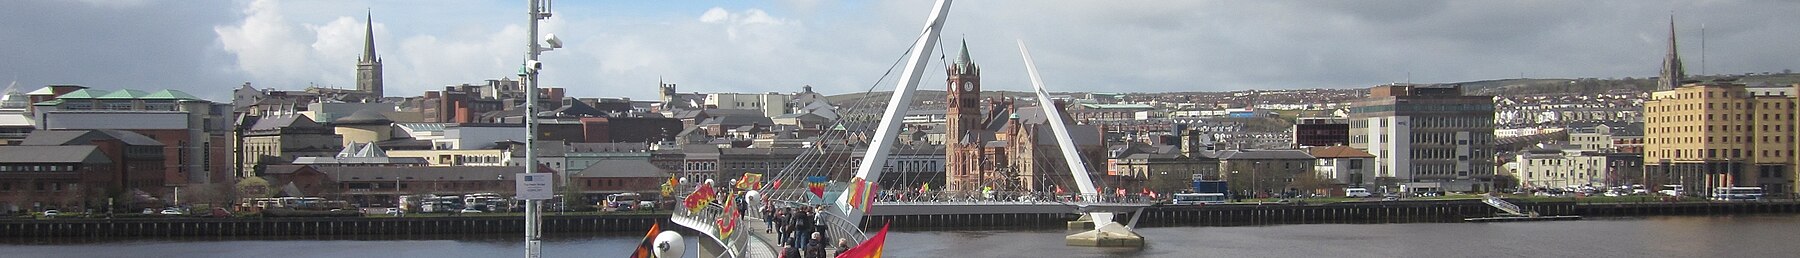 Bannière Derry-Londonderry.jpg